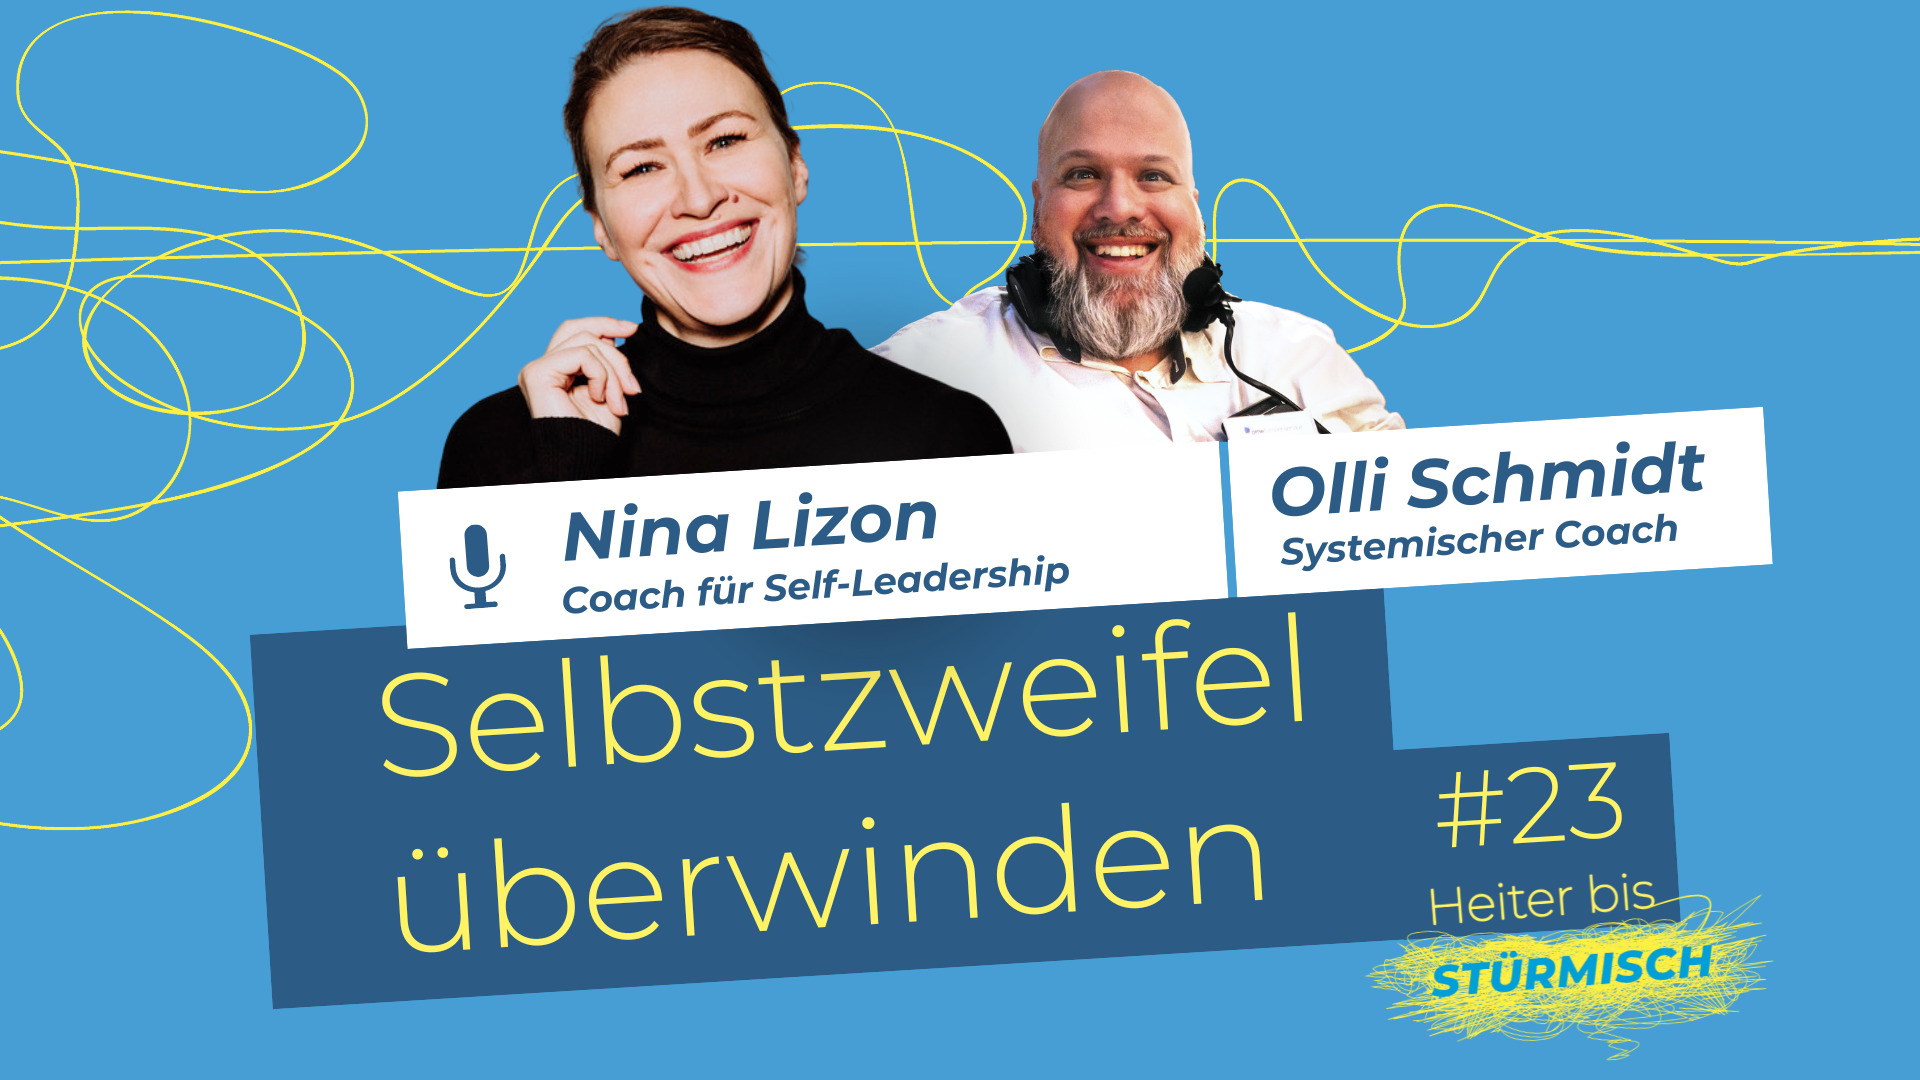 Coachin Nina Lizon mit Podcast Host Olli Schmidt